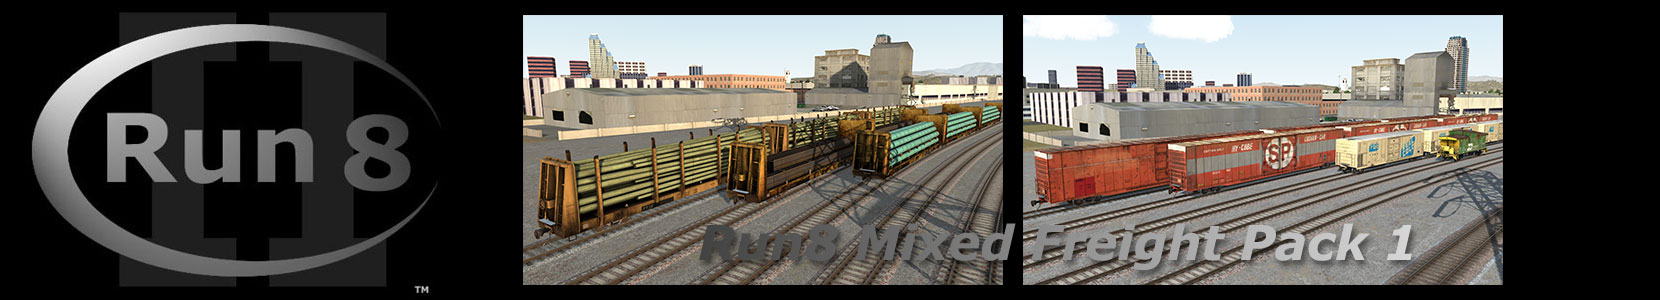 Run8 Train Simulator Mixed Freight Pack 1